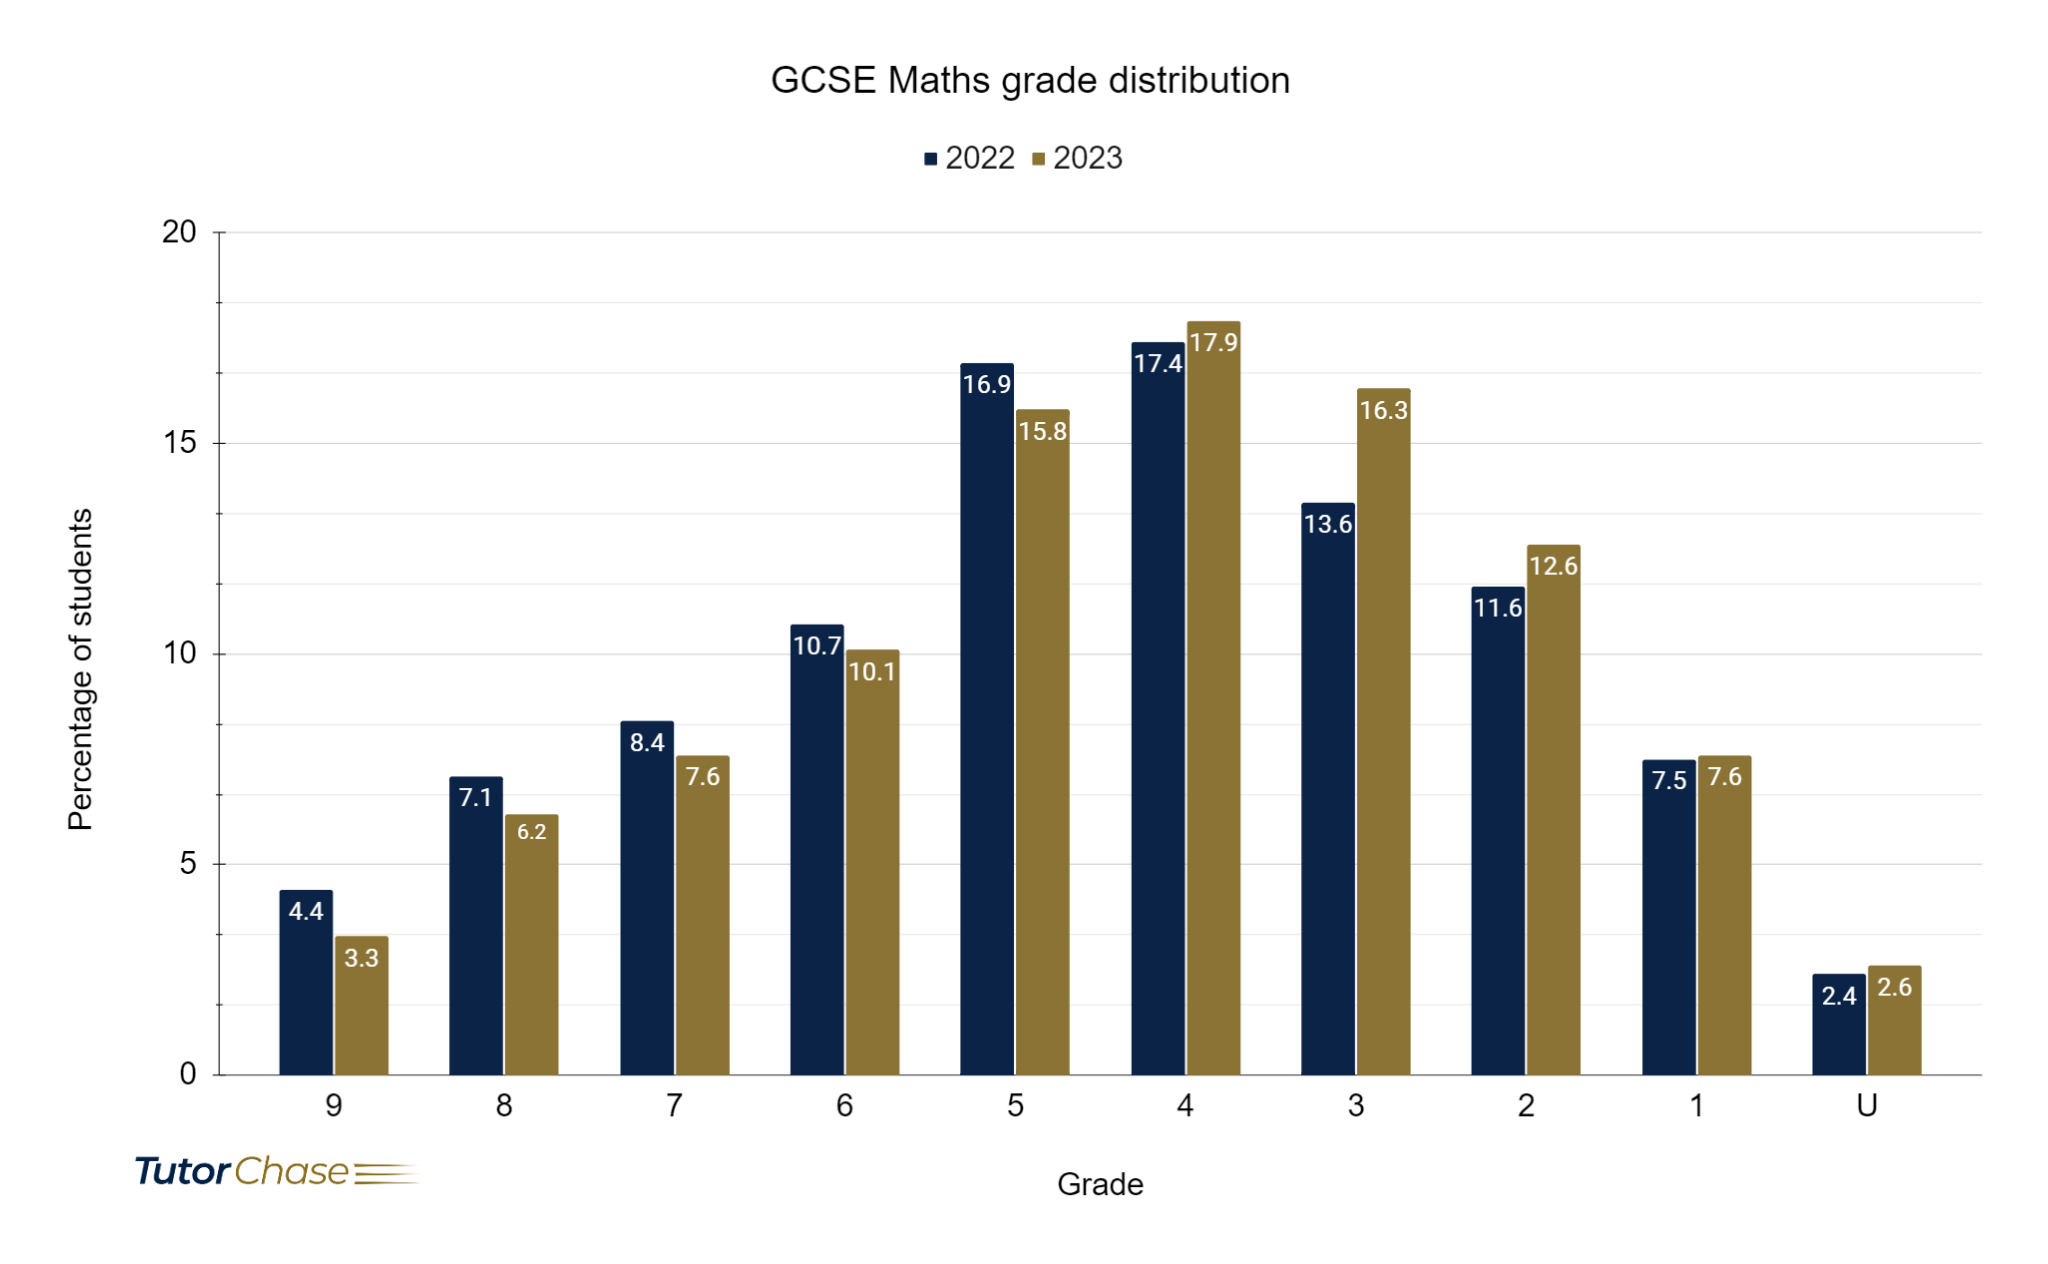 GCSE Maths grade distribution for 2022 and 2023